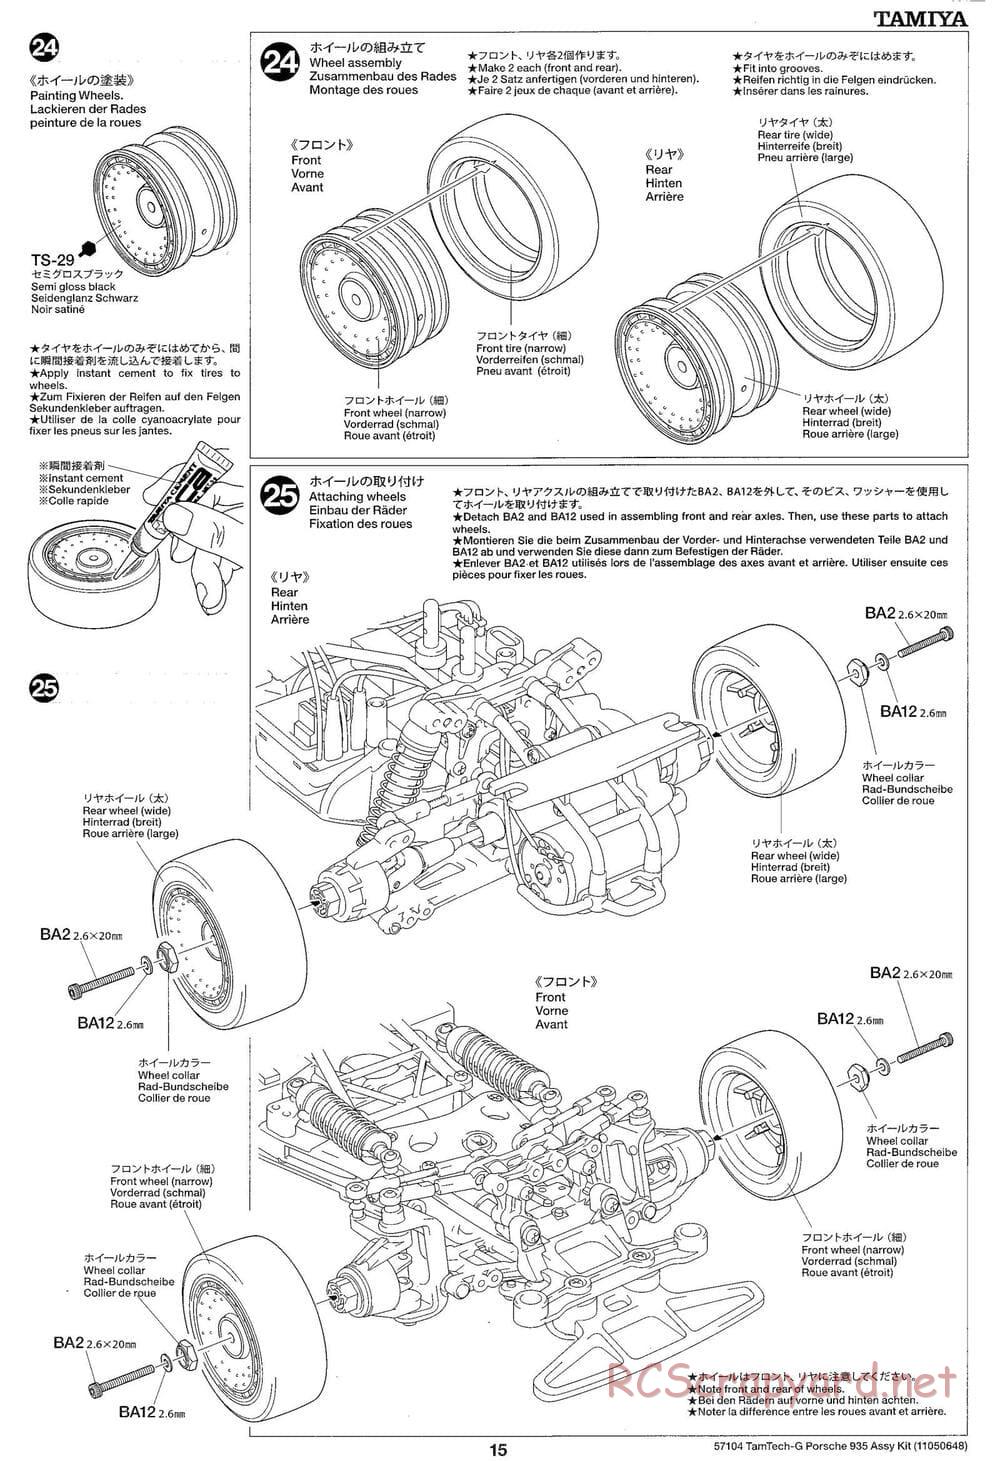 Tamiya - Porsche 935 Martini - GT-01 Chassis - Manual - Page 15